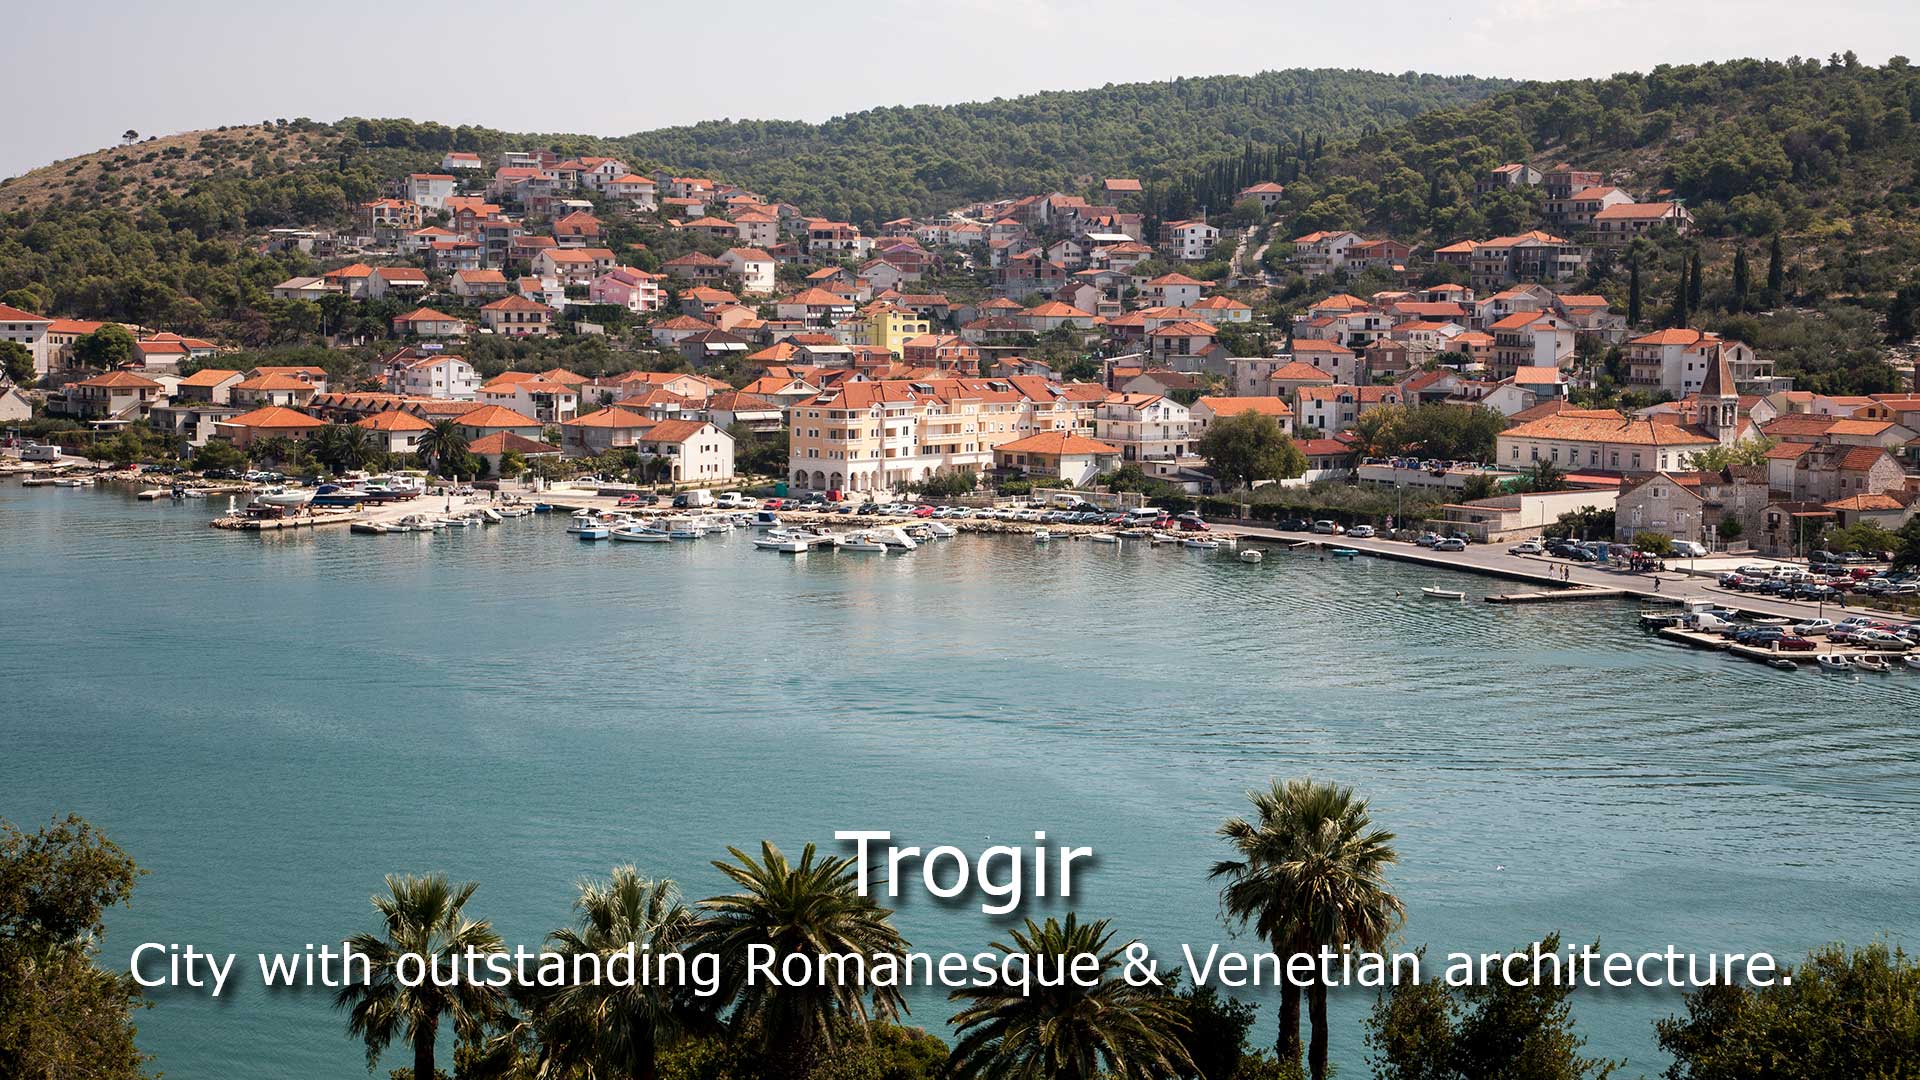 View of sea coast in Trogir town with colorful houses, Dalmatia, Croatia